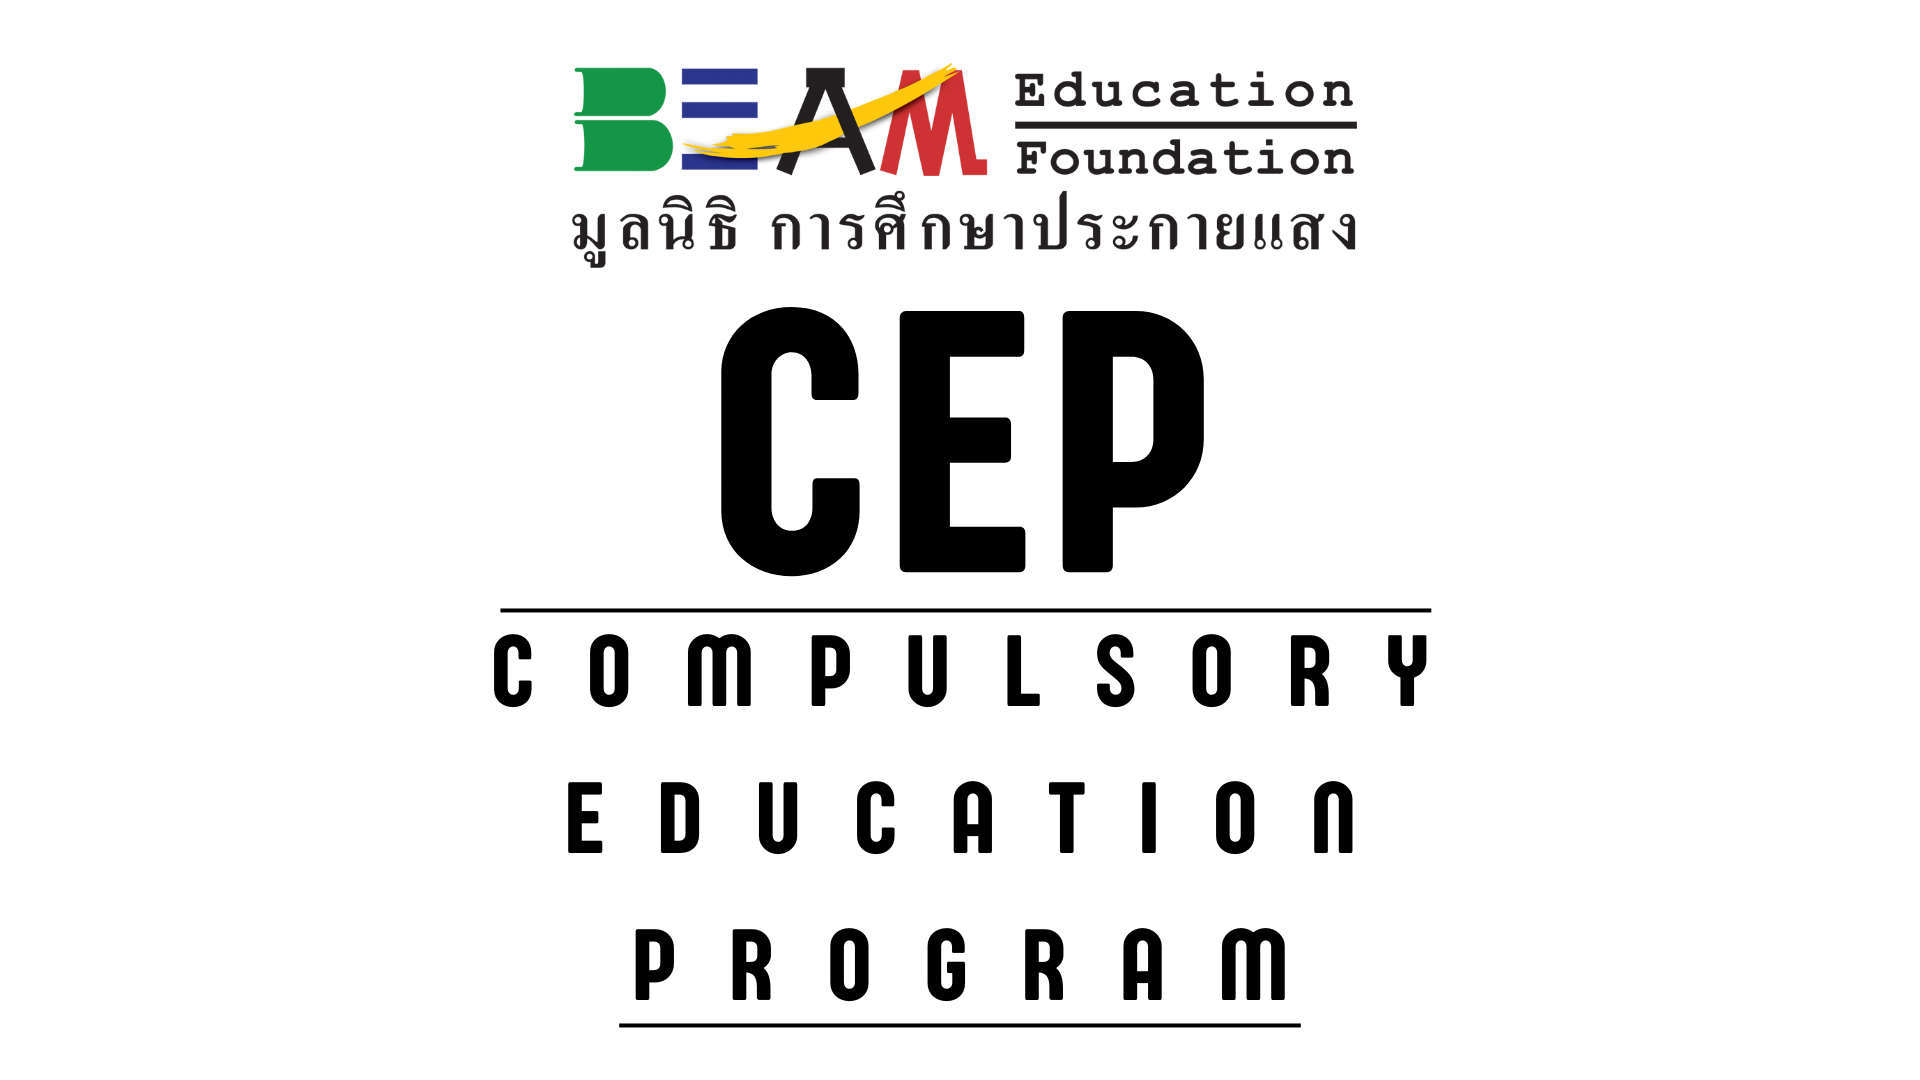 Compulsory Education Program